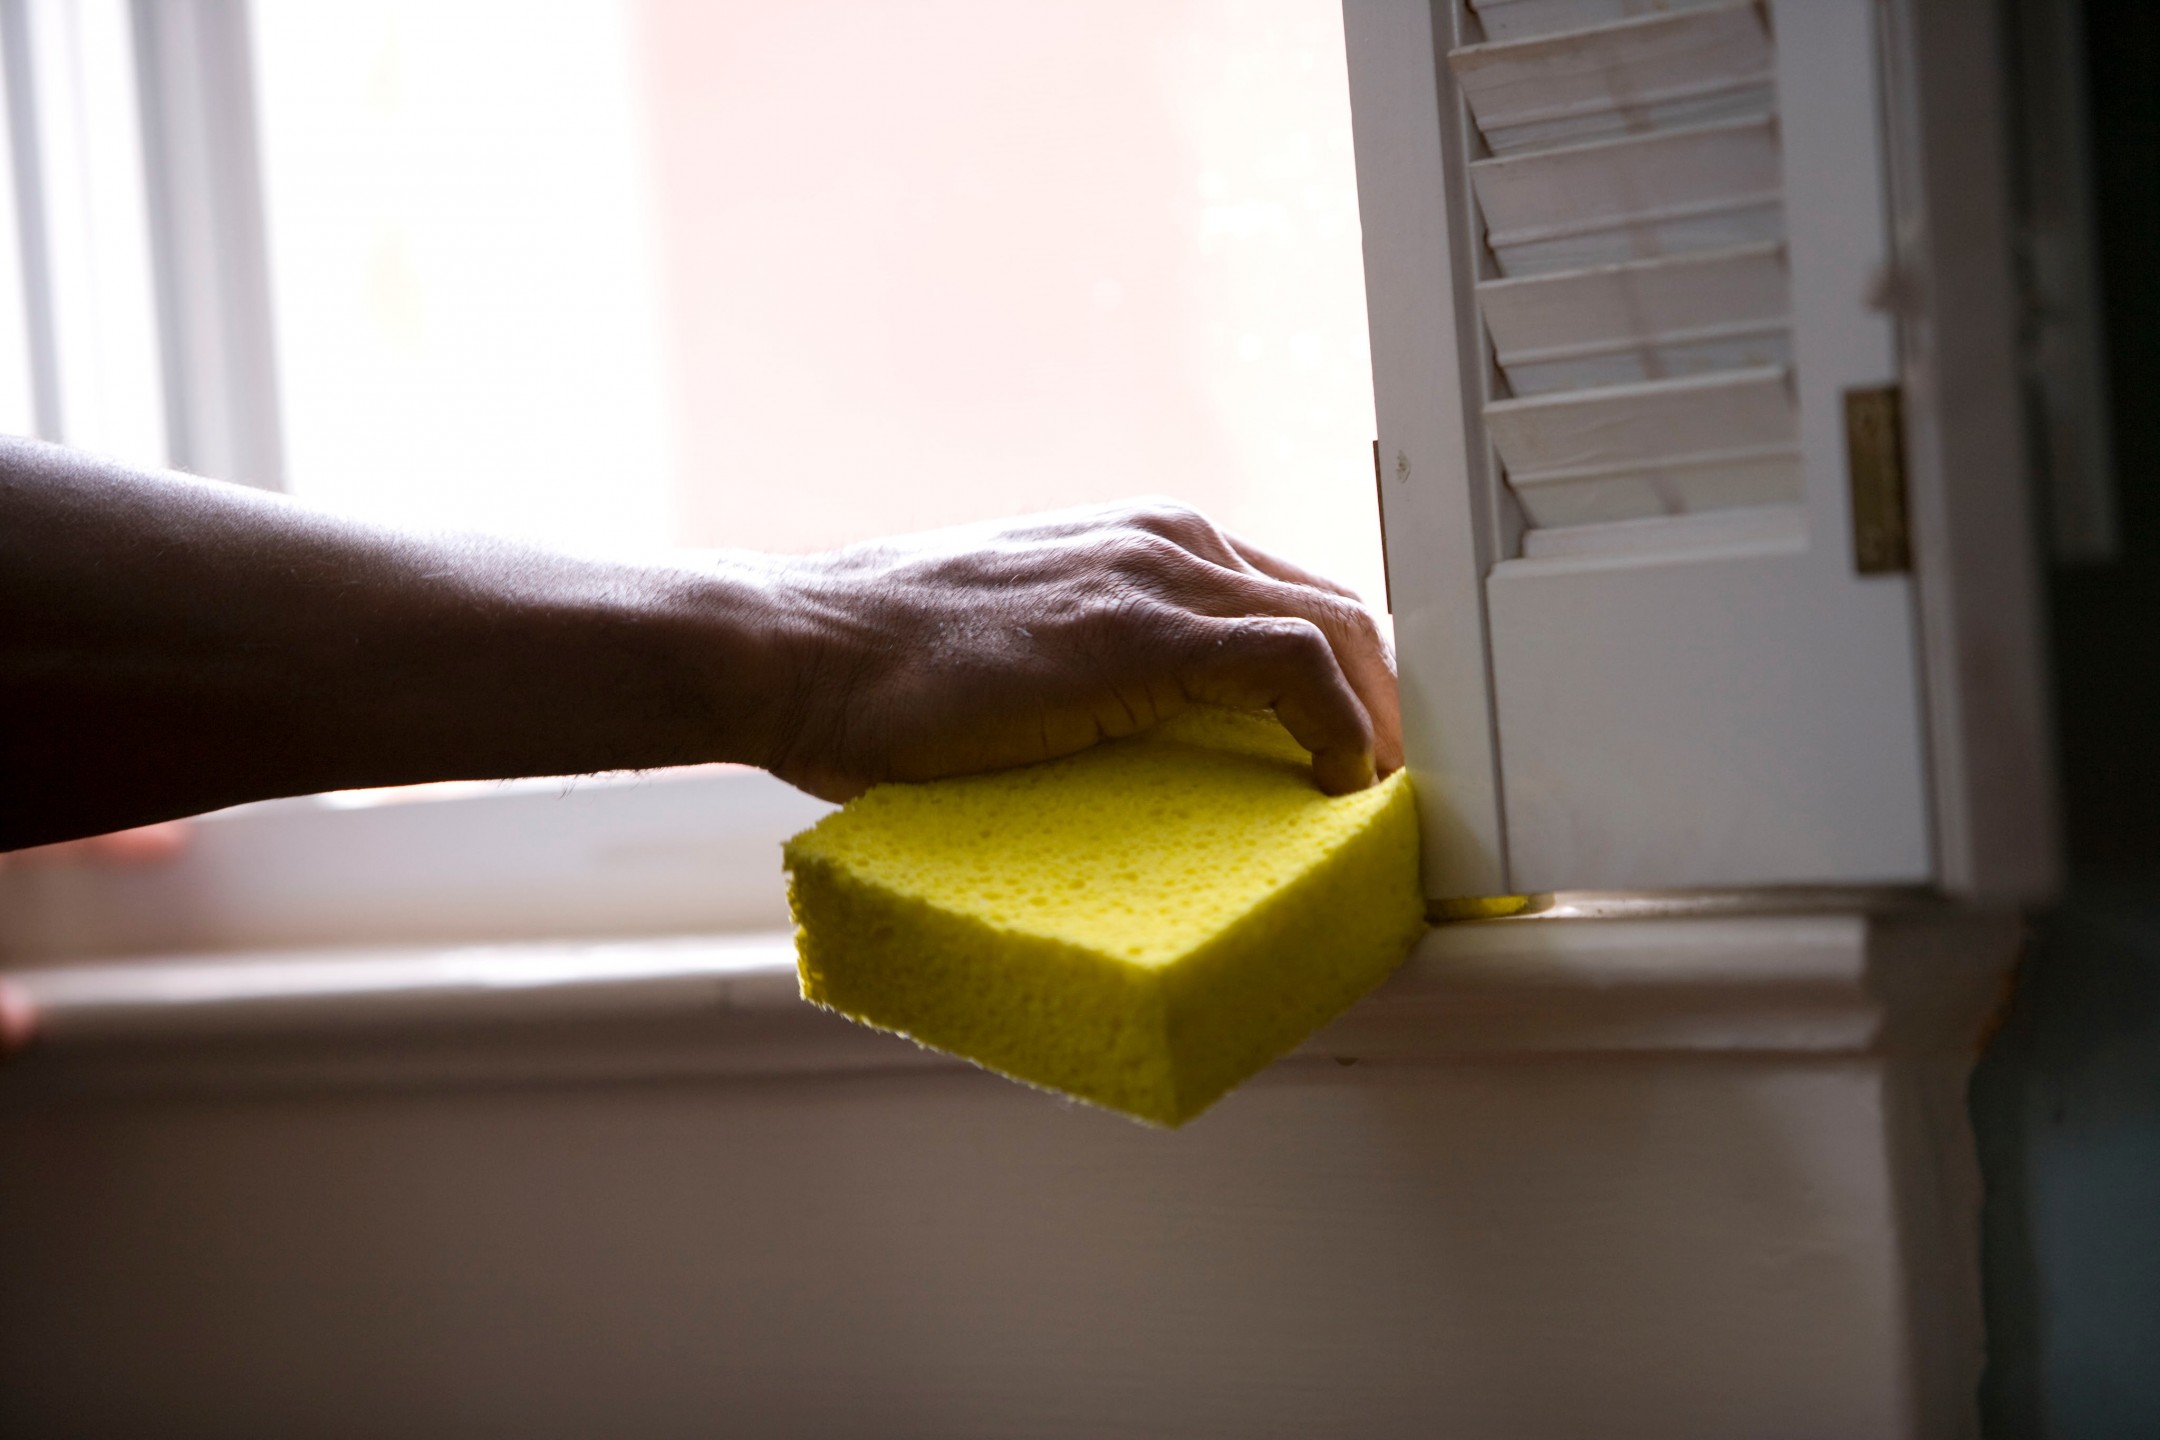 squarerooms cdc sponge arm hand cleaning window